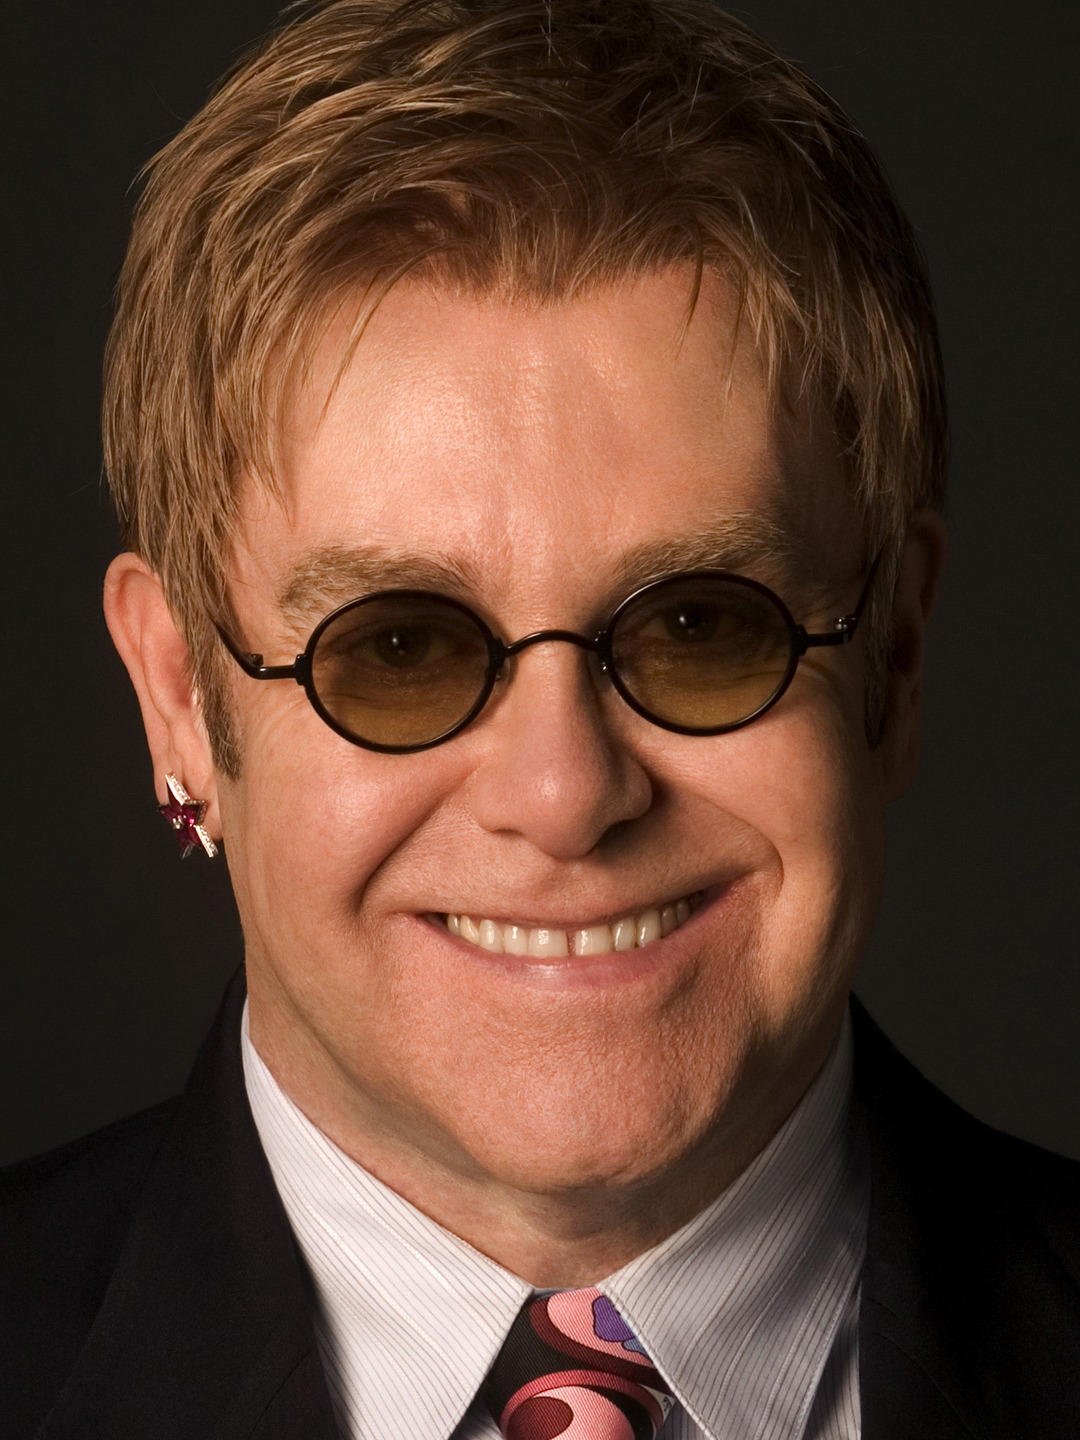 Elton John does he have kids